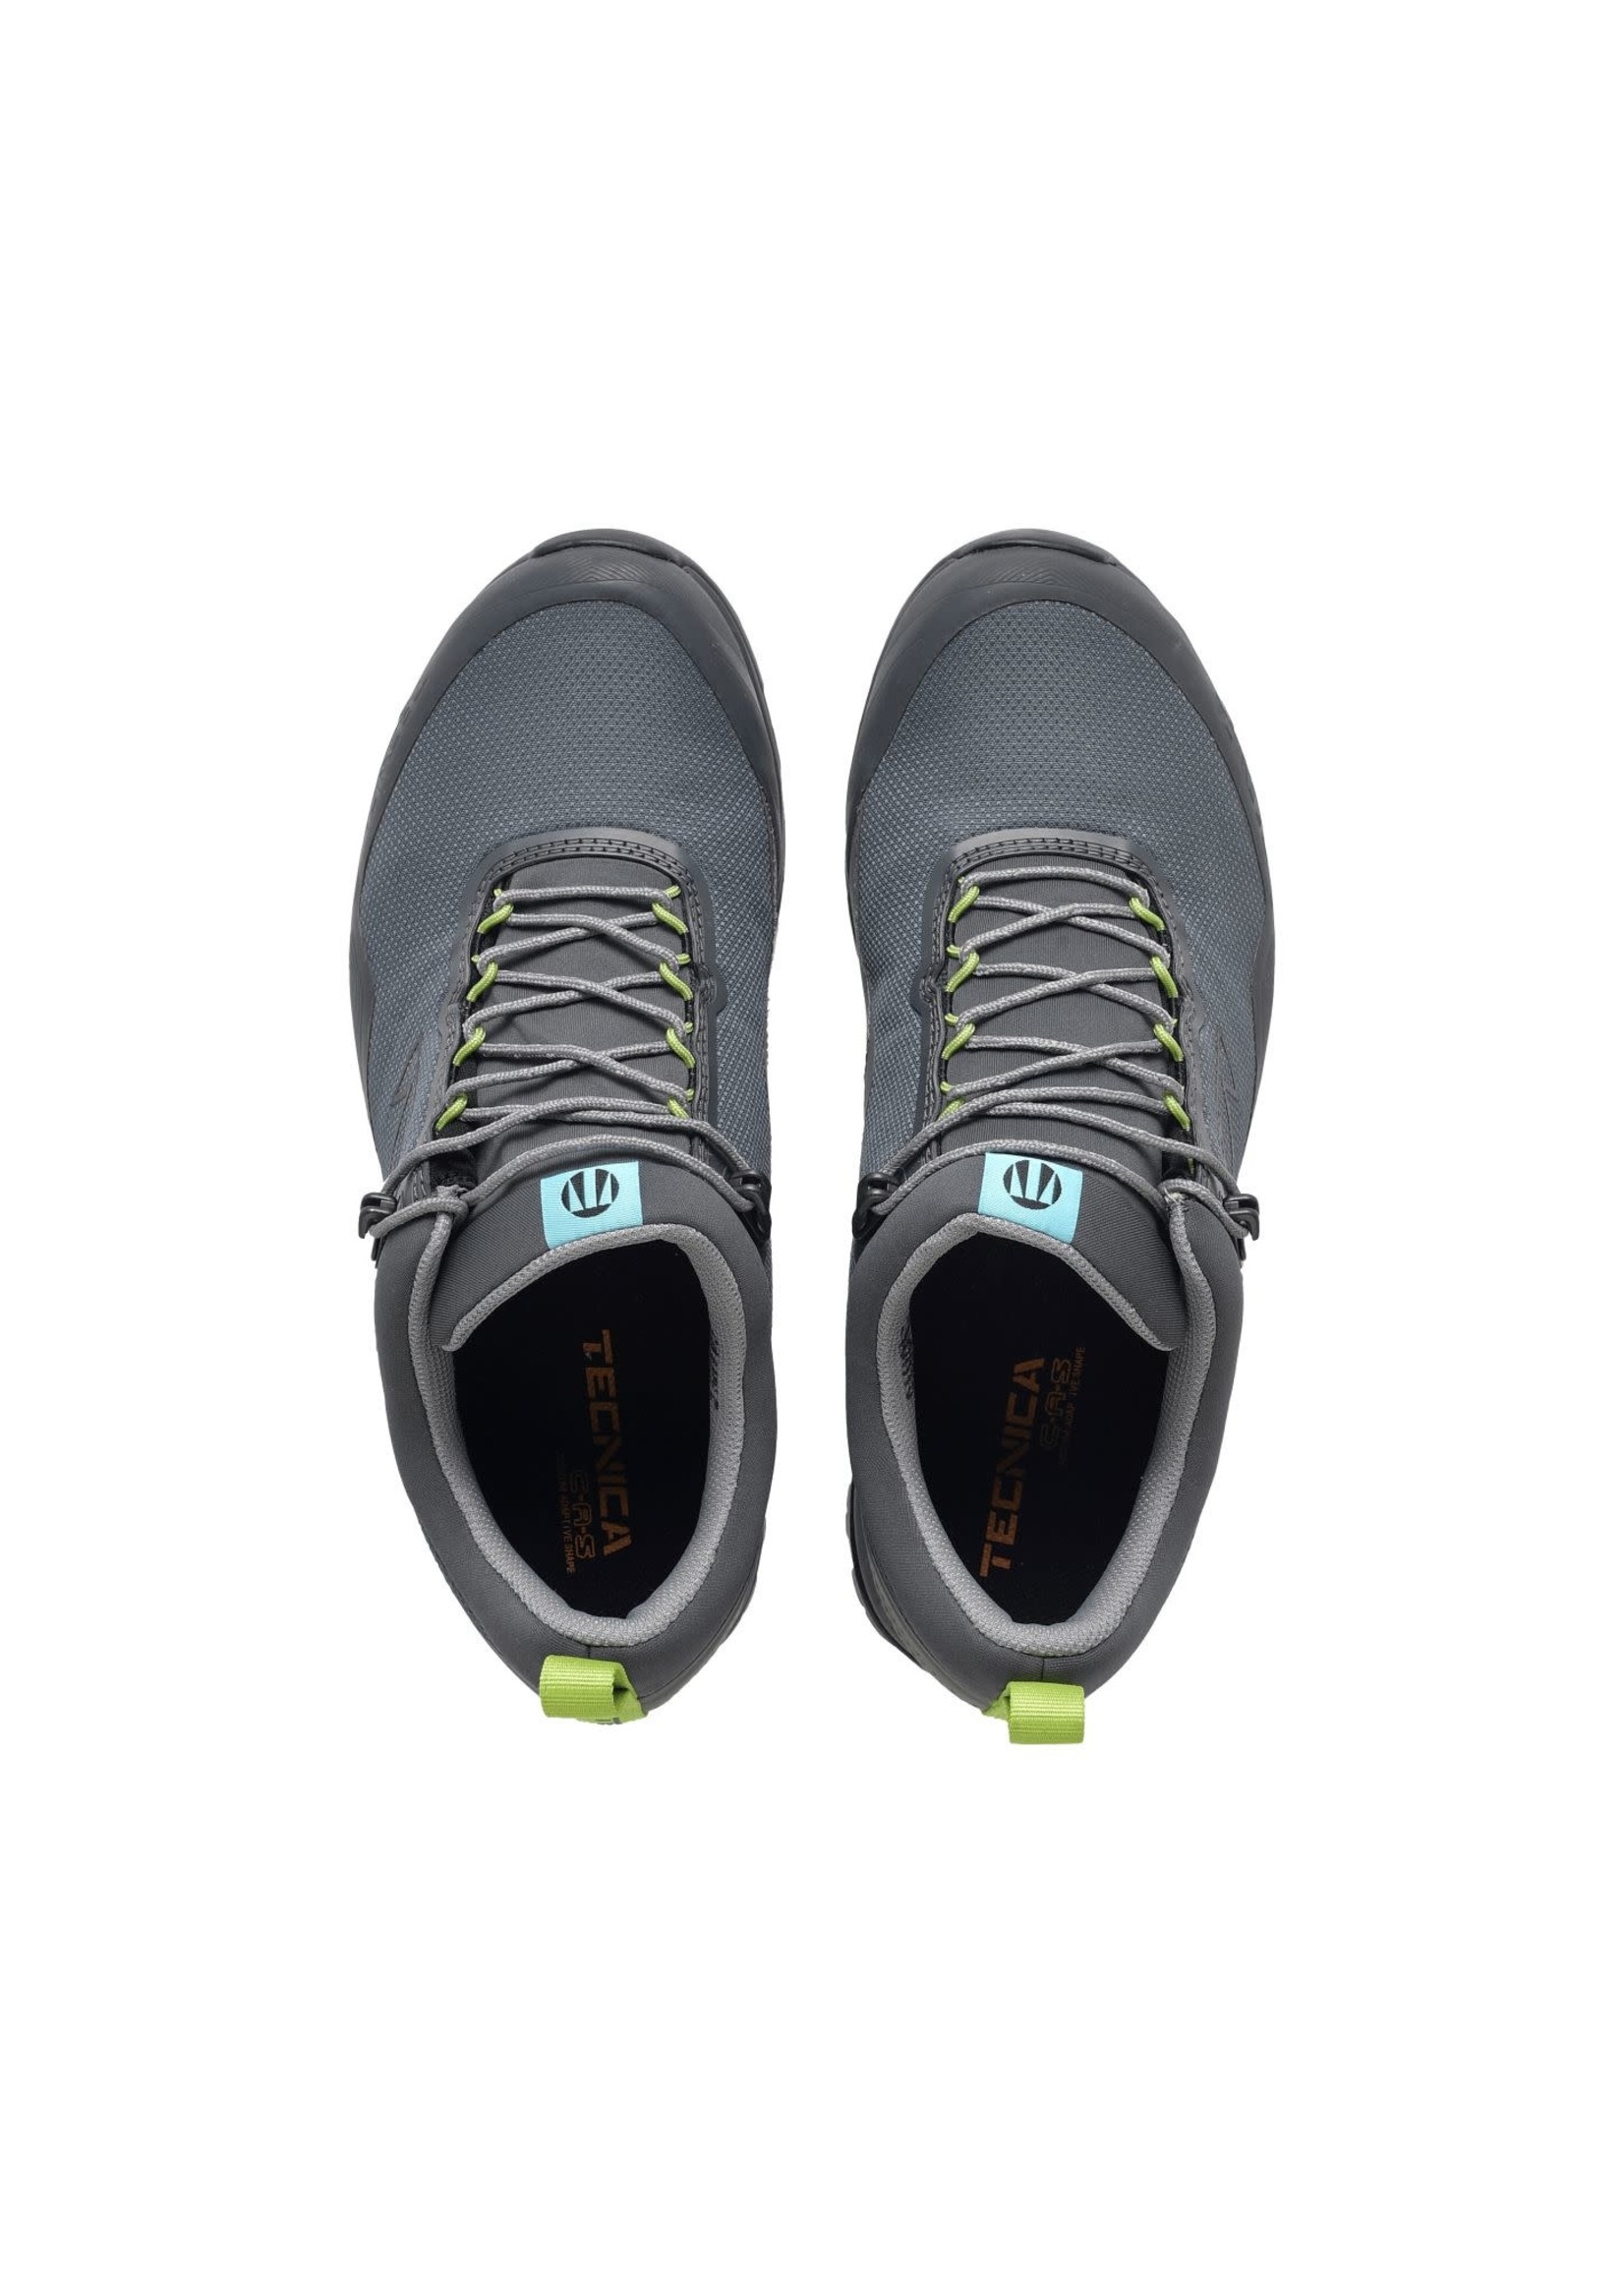 Tecnica Tecnica Plasma S GTX Hiking Shoes - Women